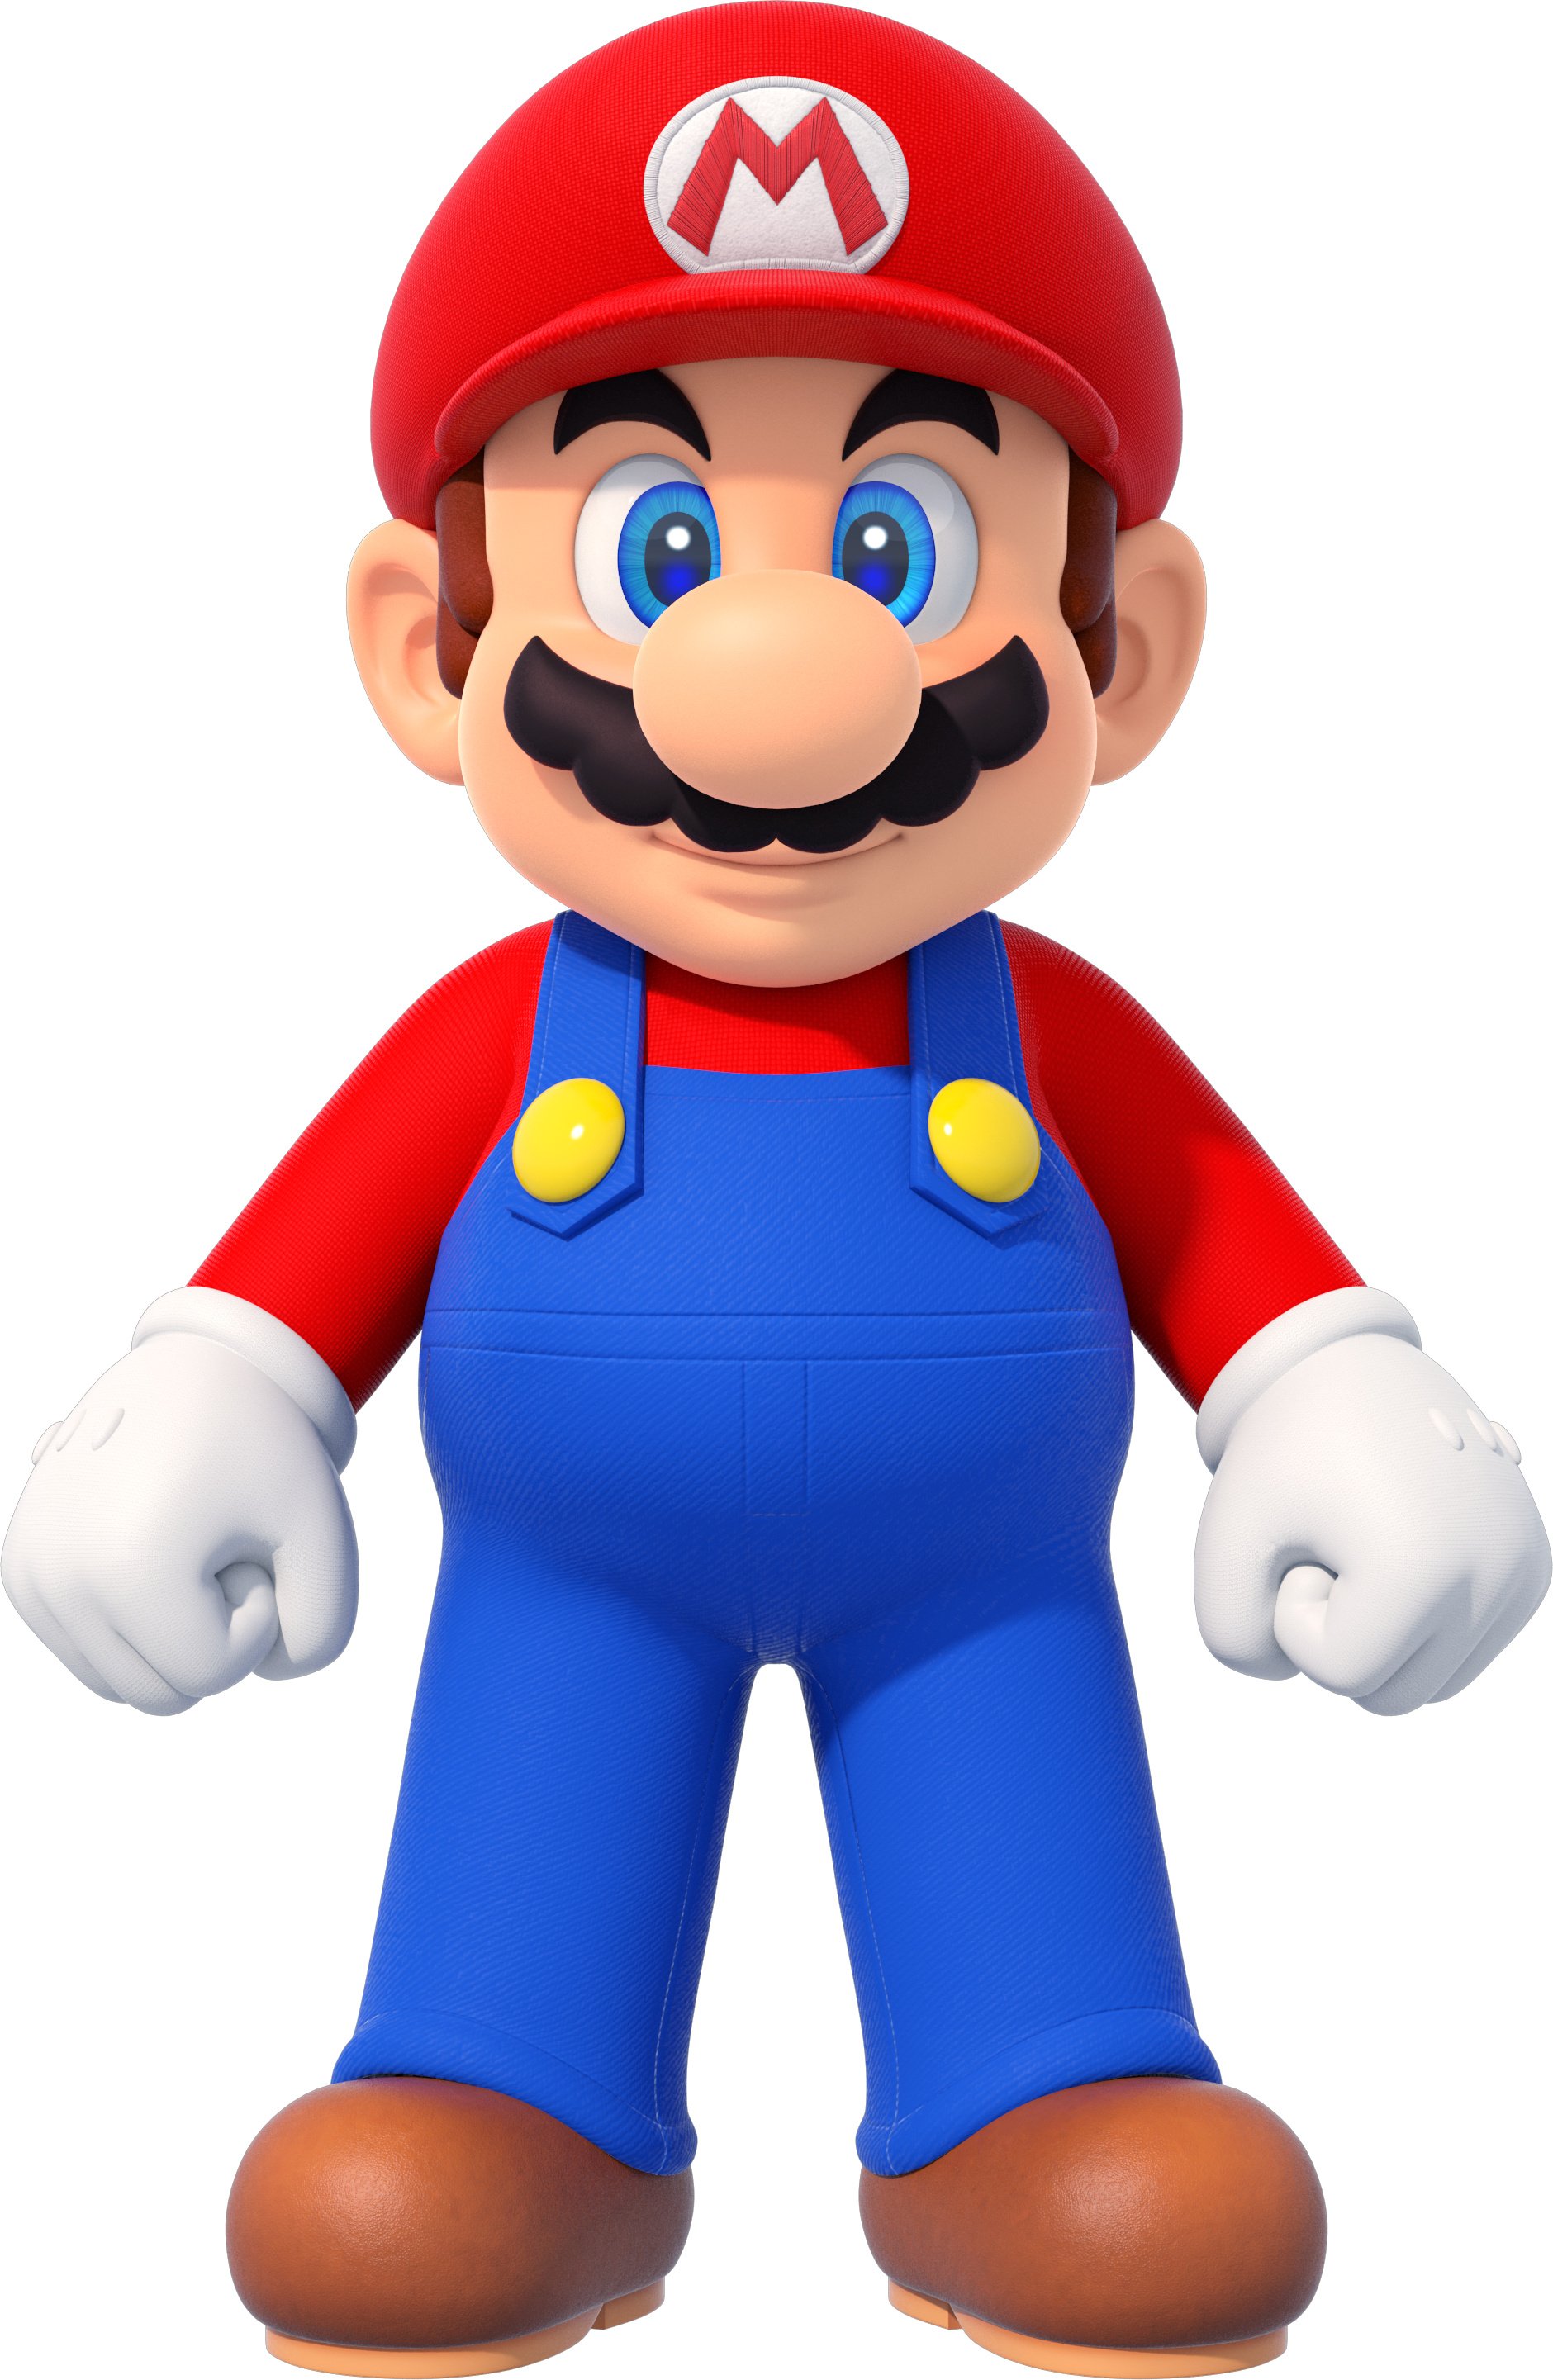 Looks Like Nintendo Accidentally Used A Fan-Made Mario ...